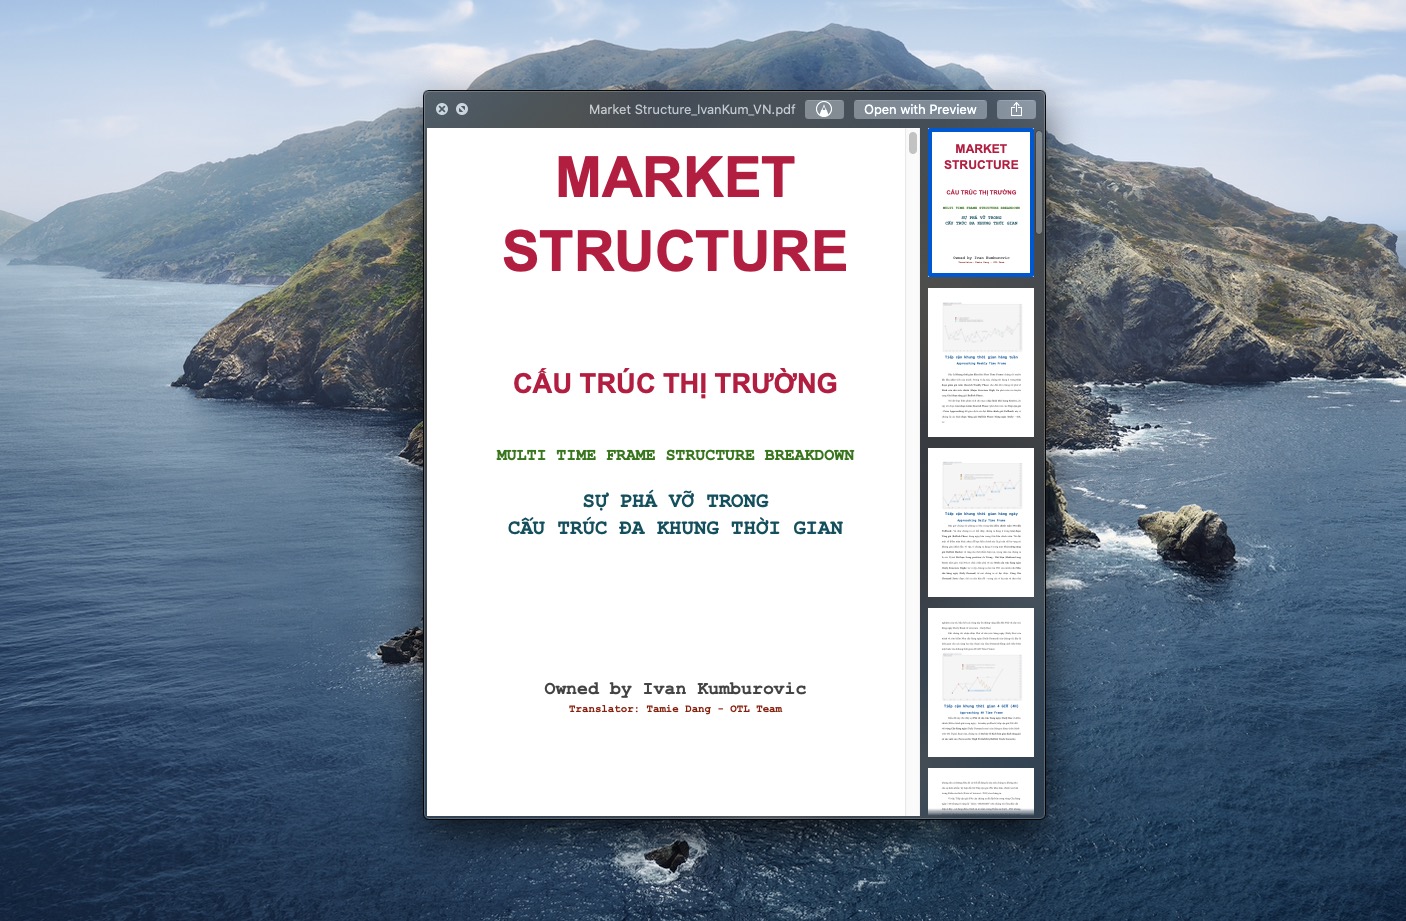 [VN] Market Structure - Ivan Kumborovic phải đọc